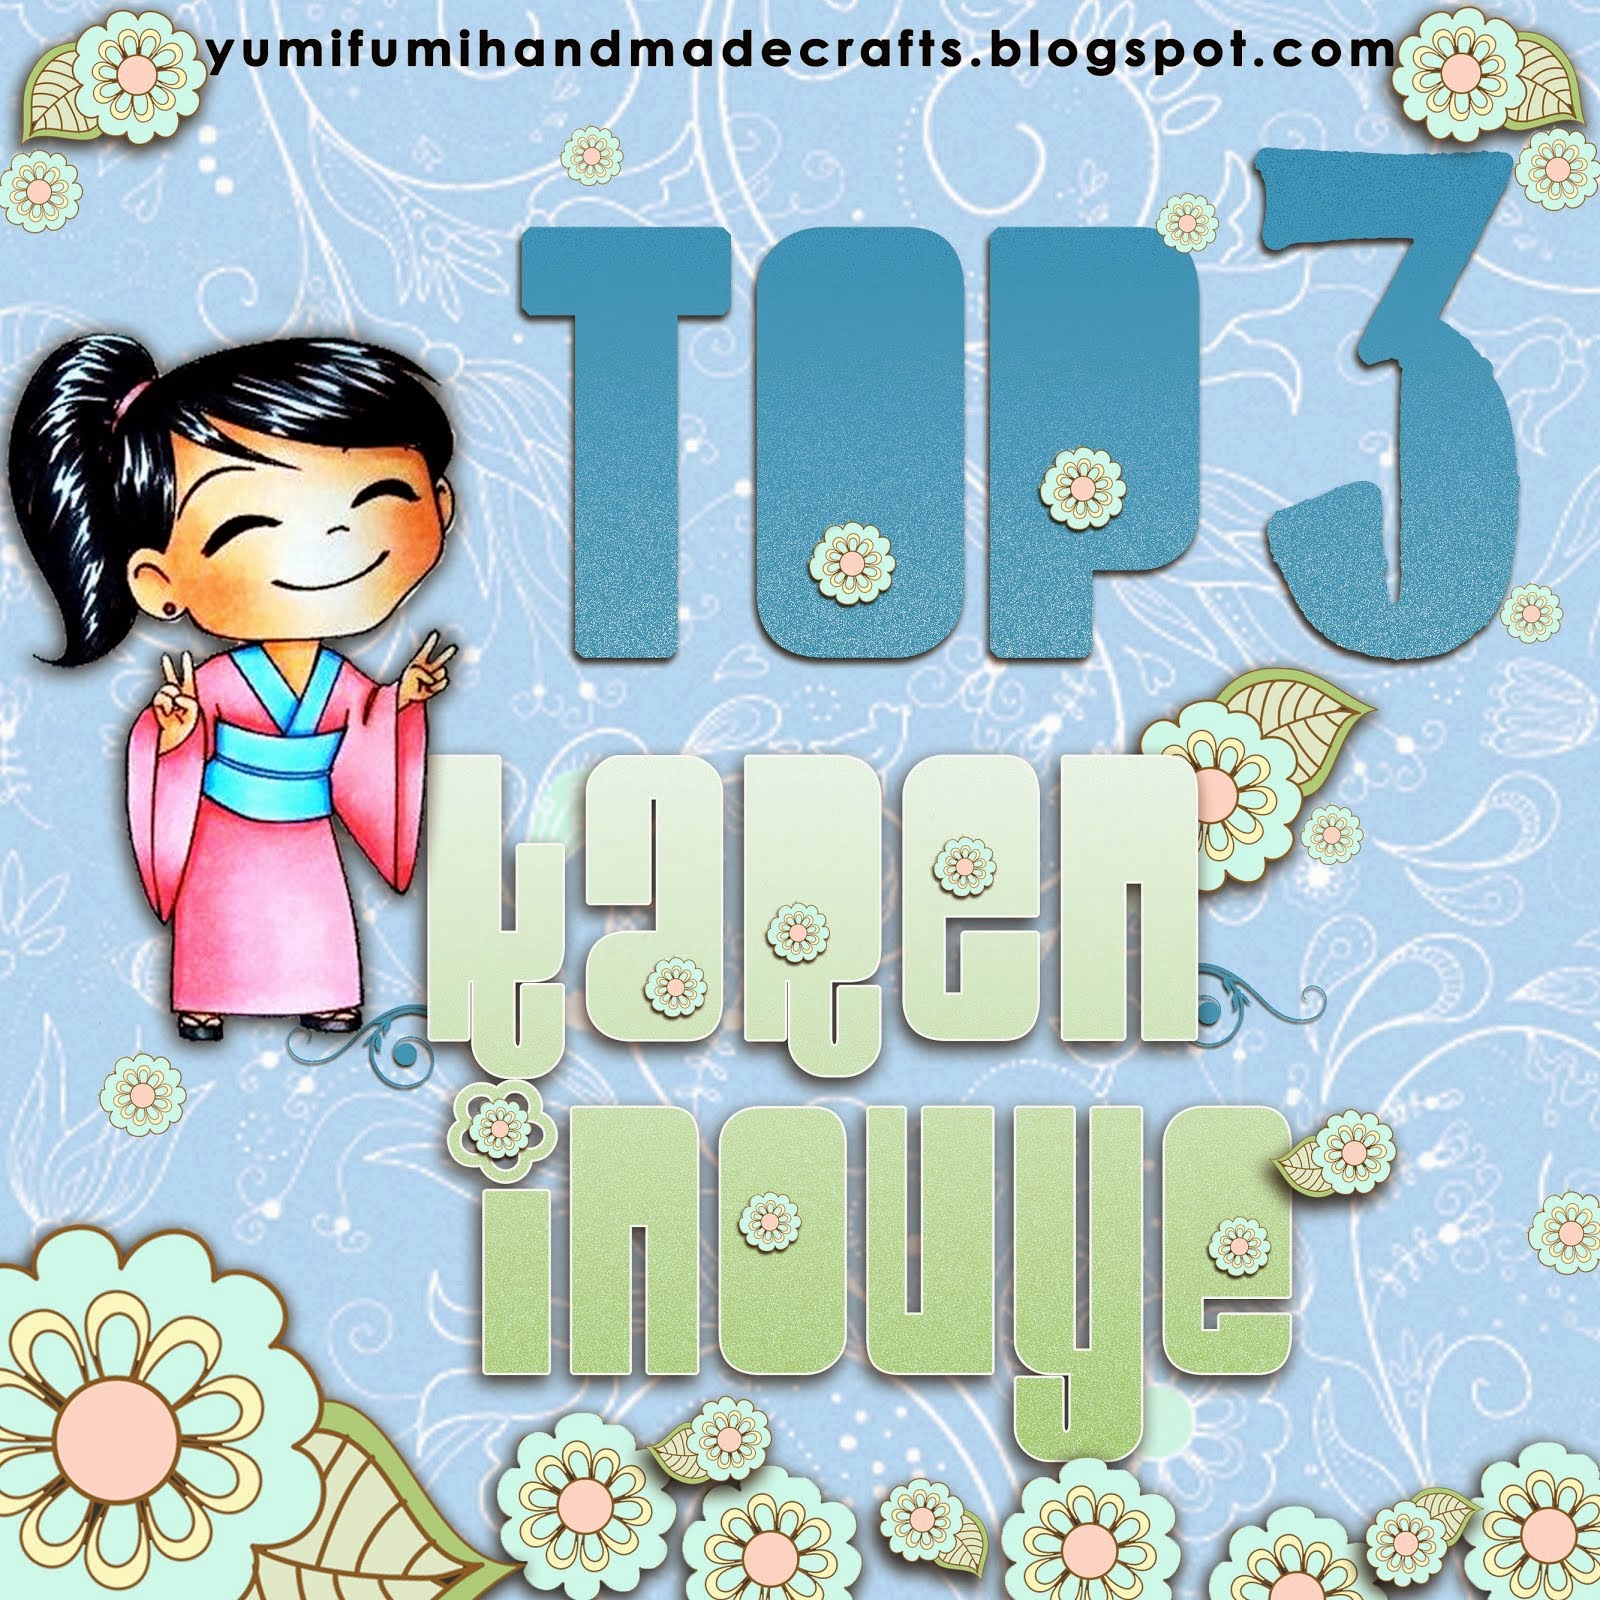 Yay, I made Top 3 on Yumi and Fumi Handmade